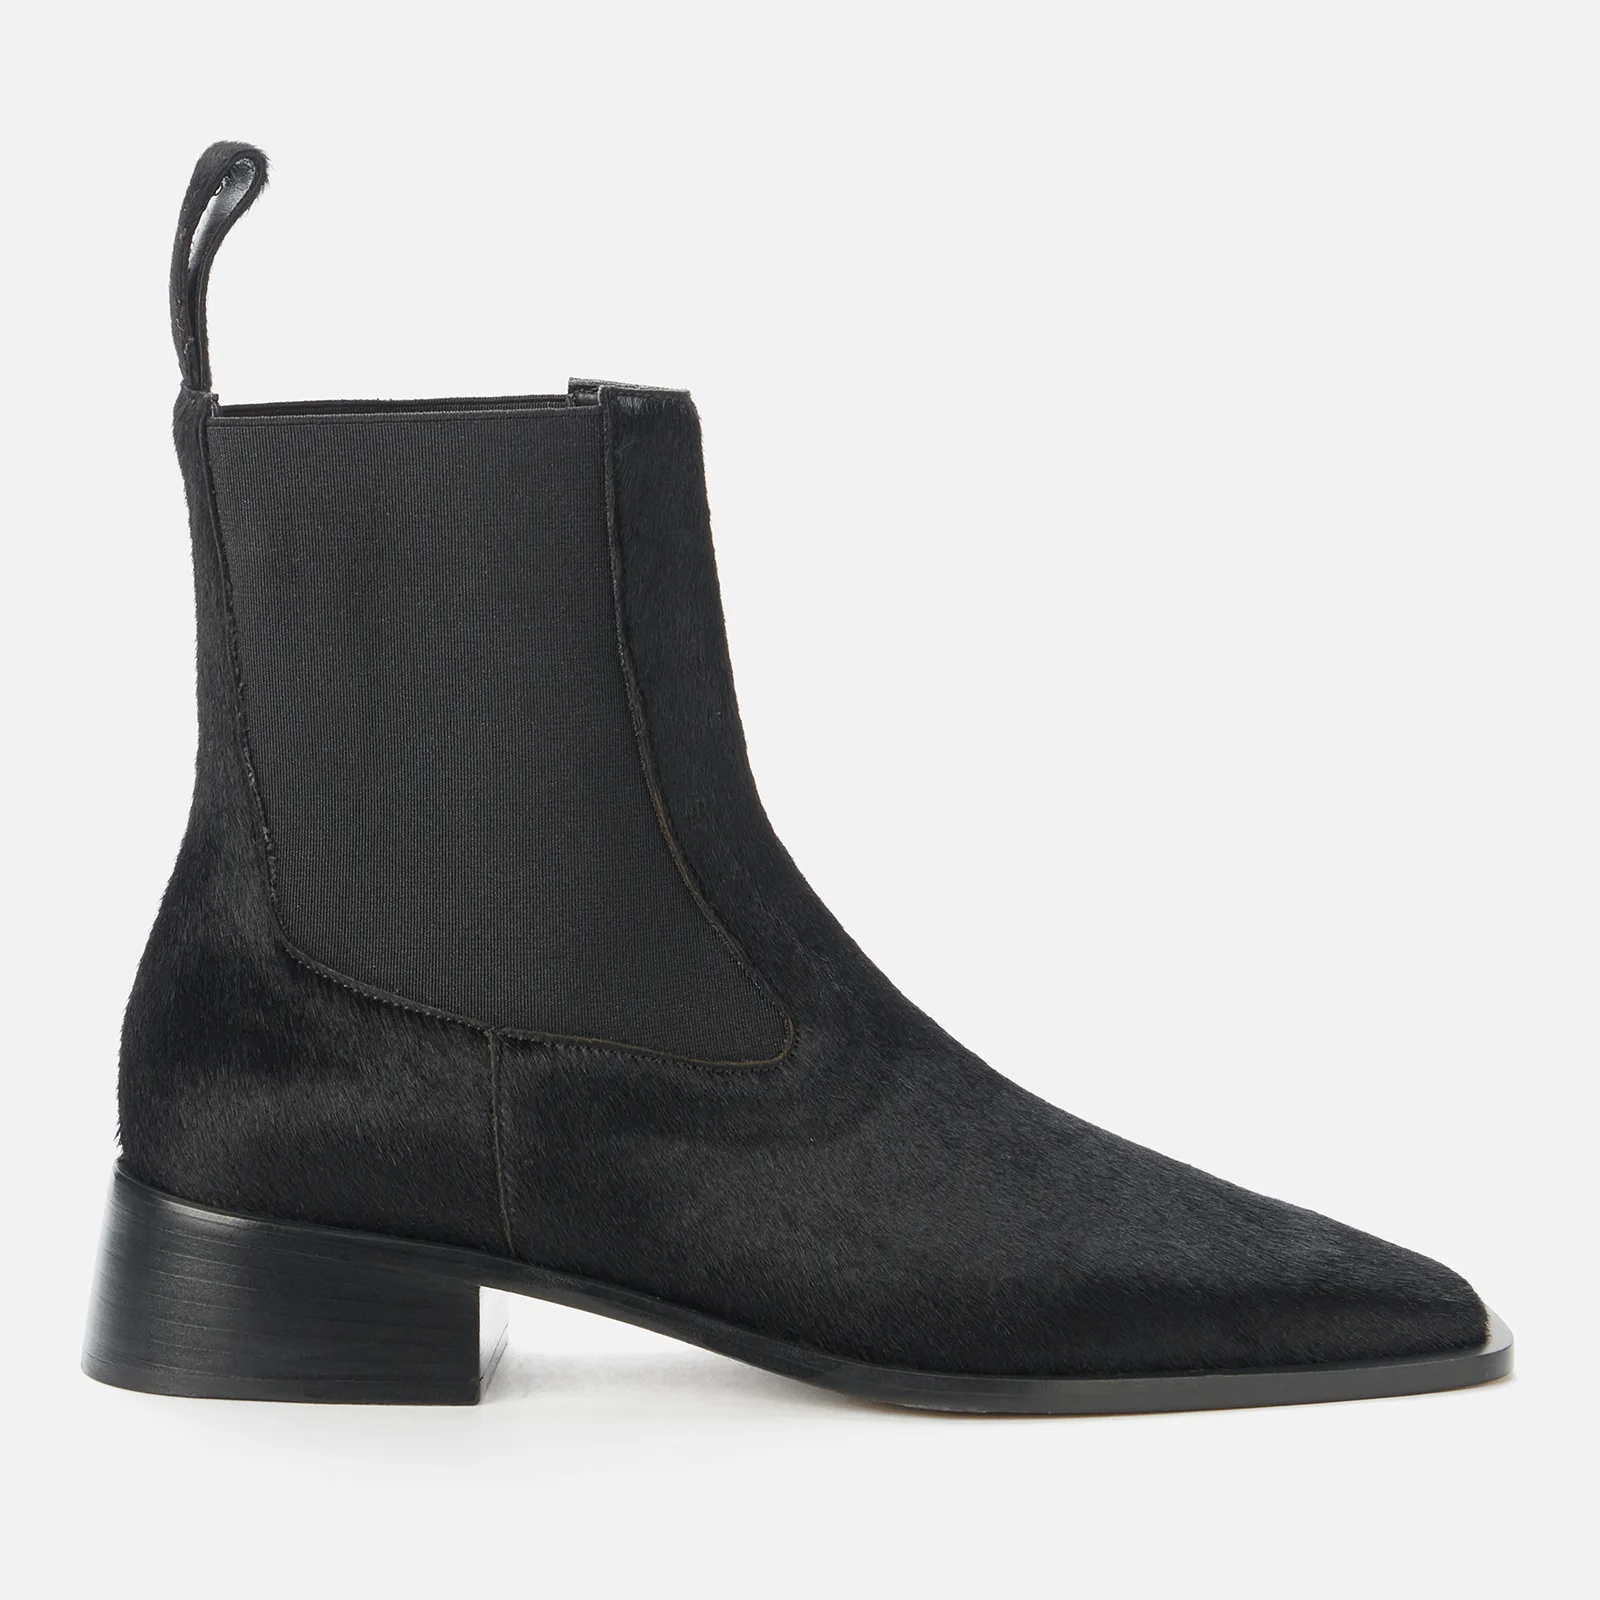 Neous Women's Revati Leather Chelsea Boots - Black/Black Image 1